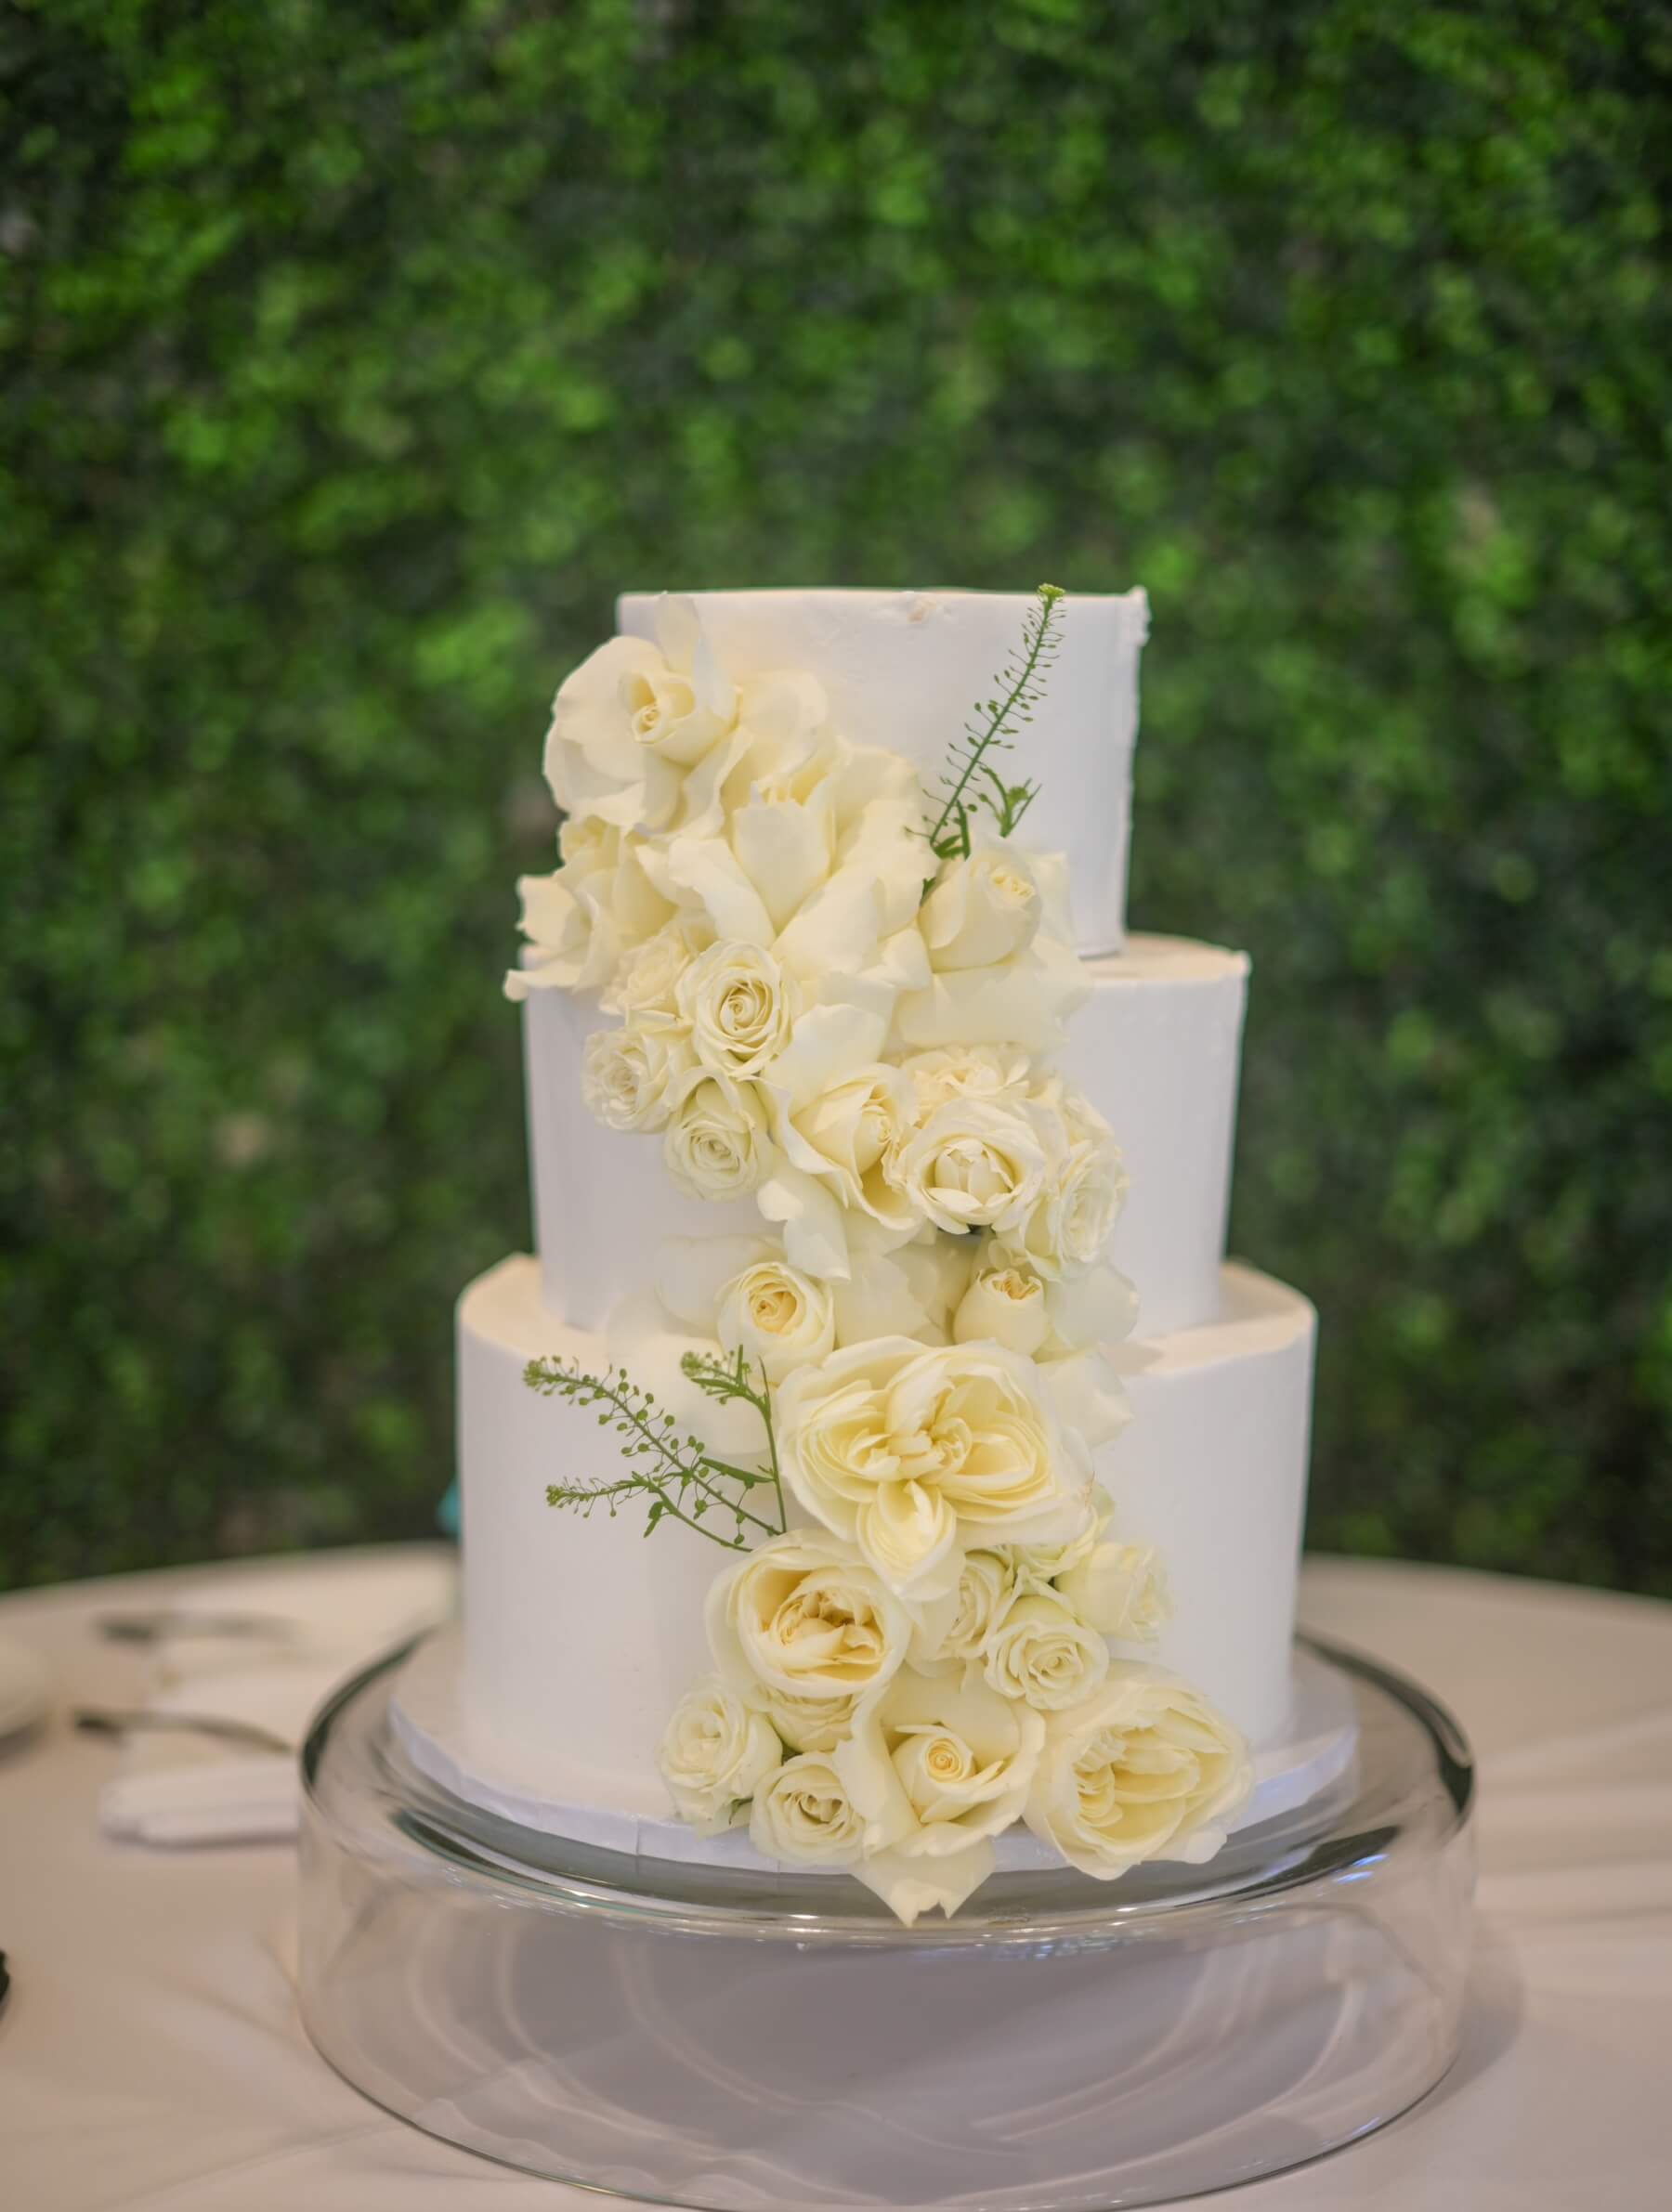 Three tier white wedding cake with white flowers 